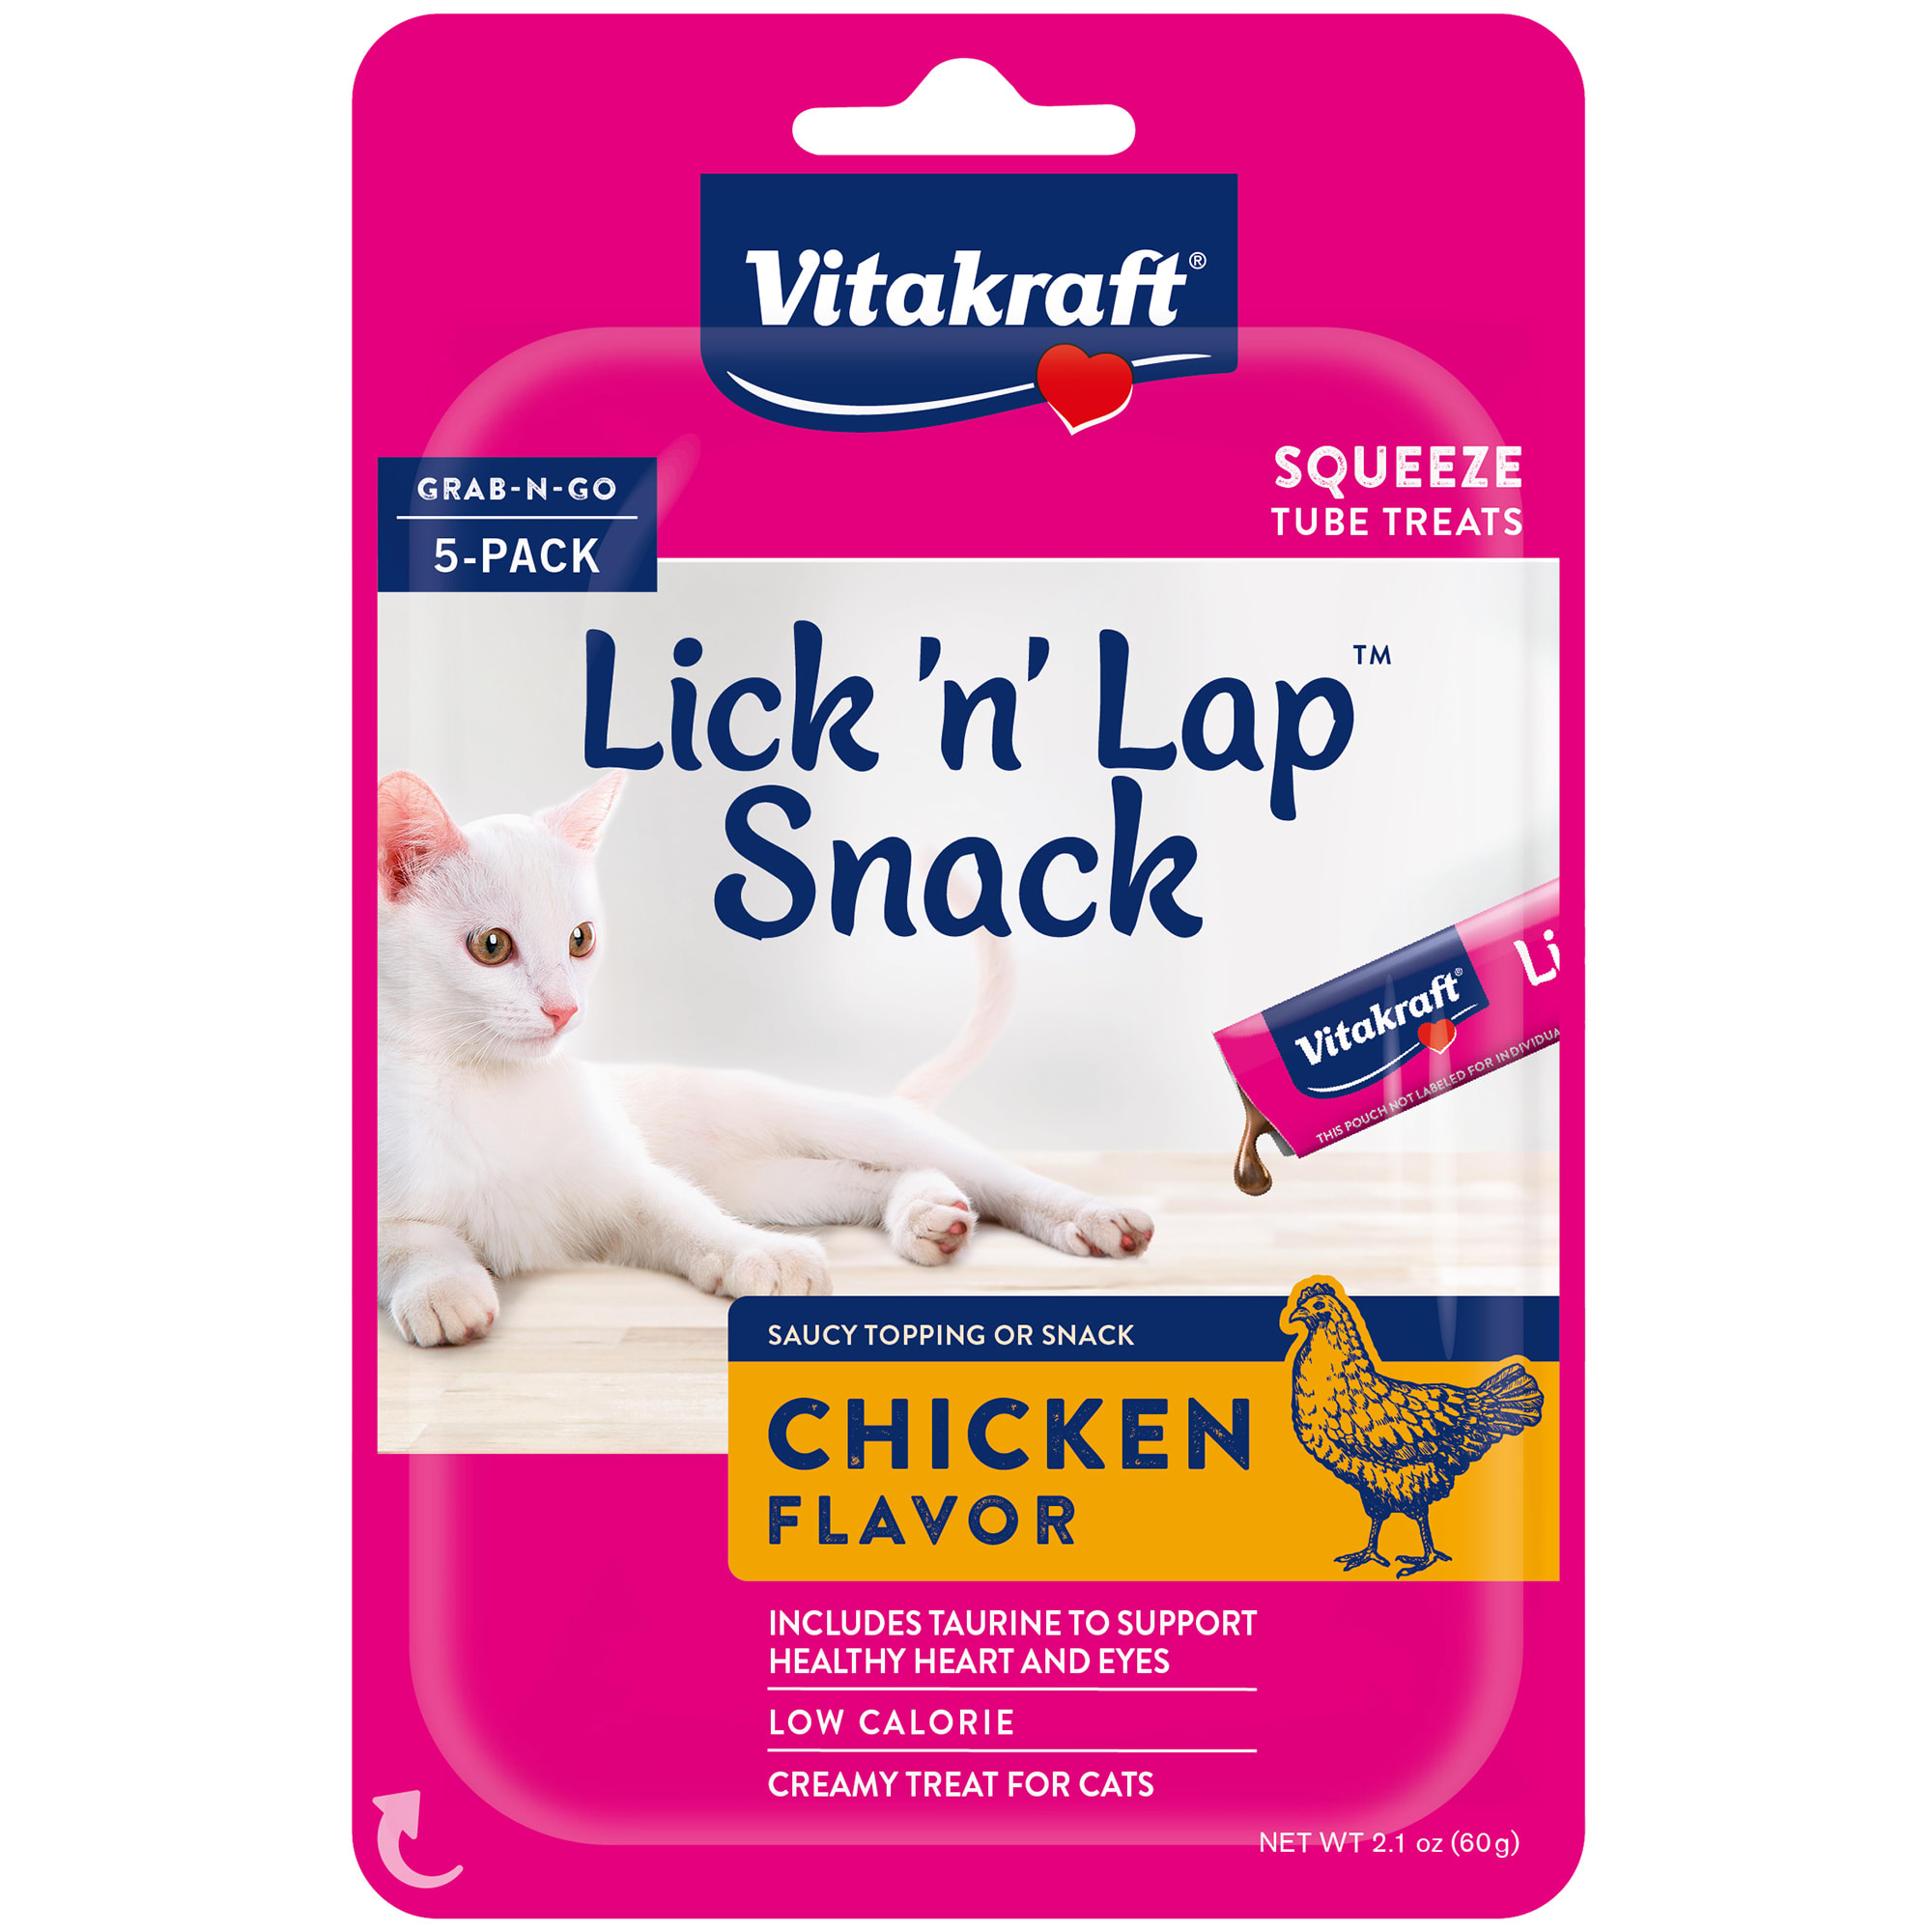 Lick, Treat, Repeat Bundle for Cats